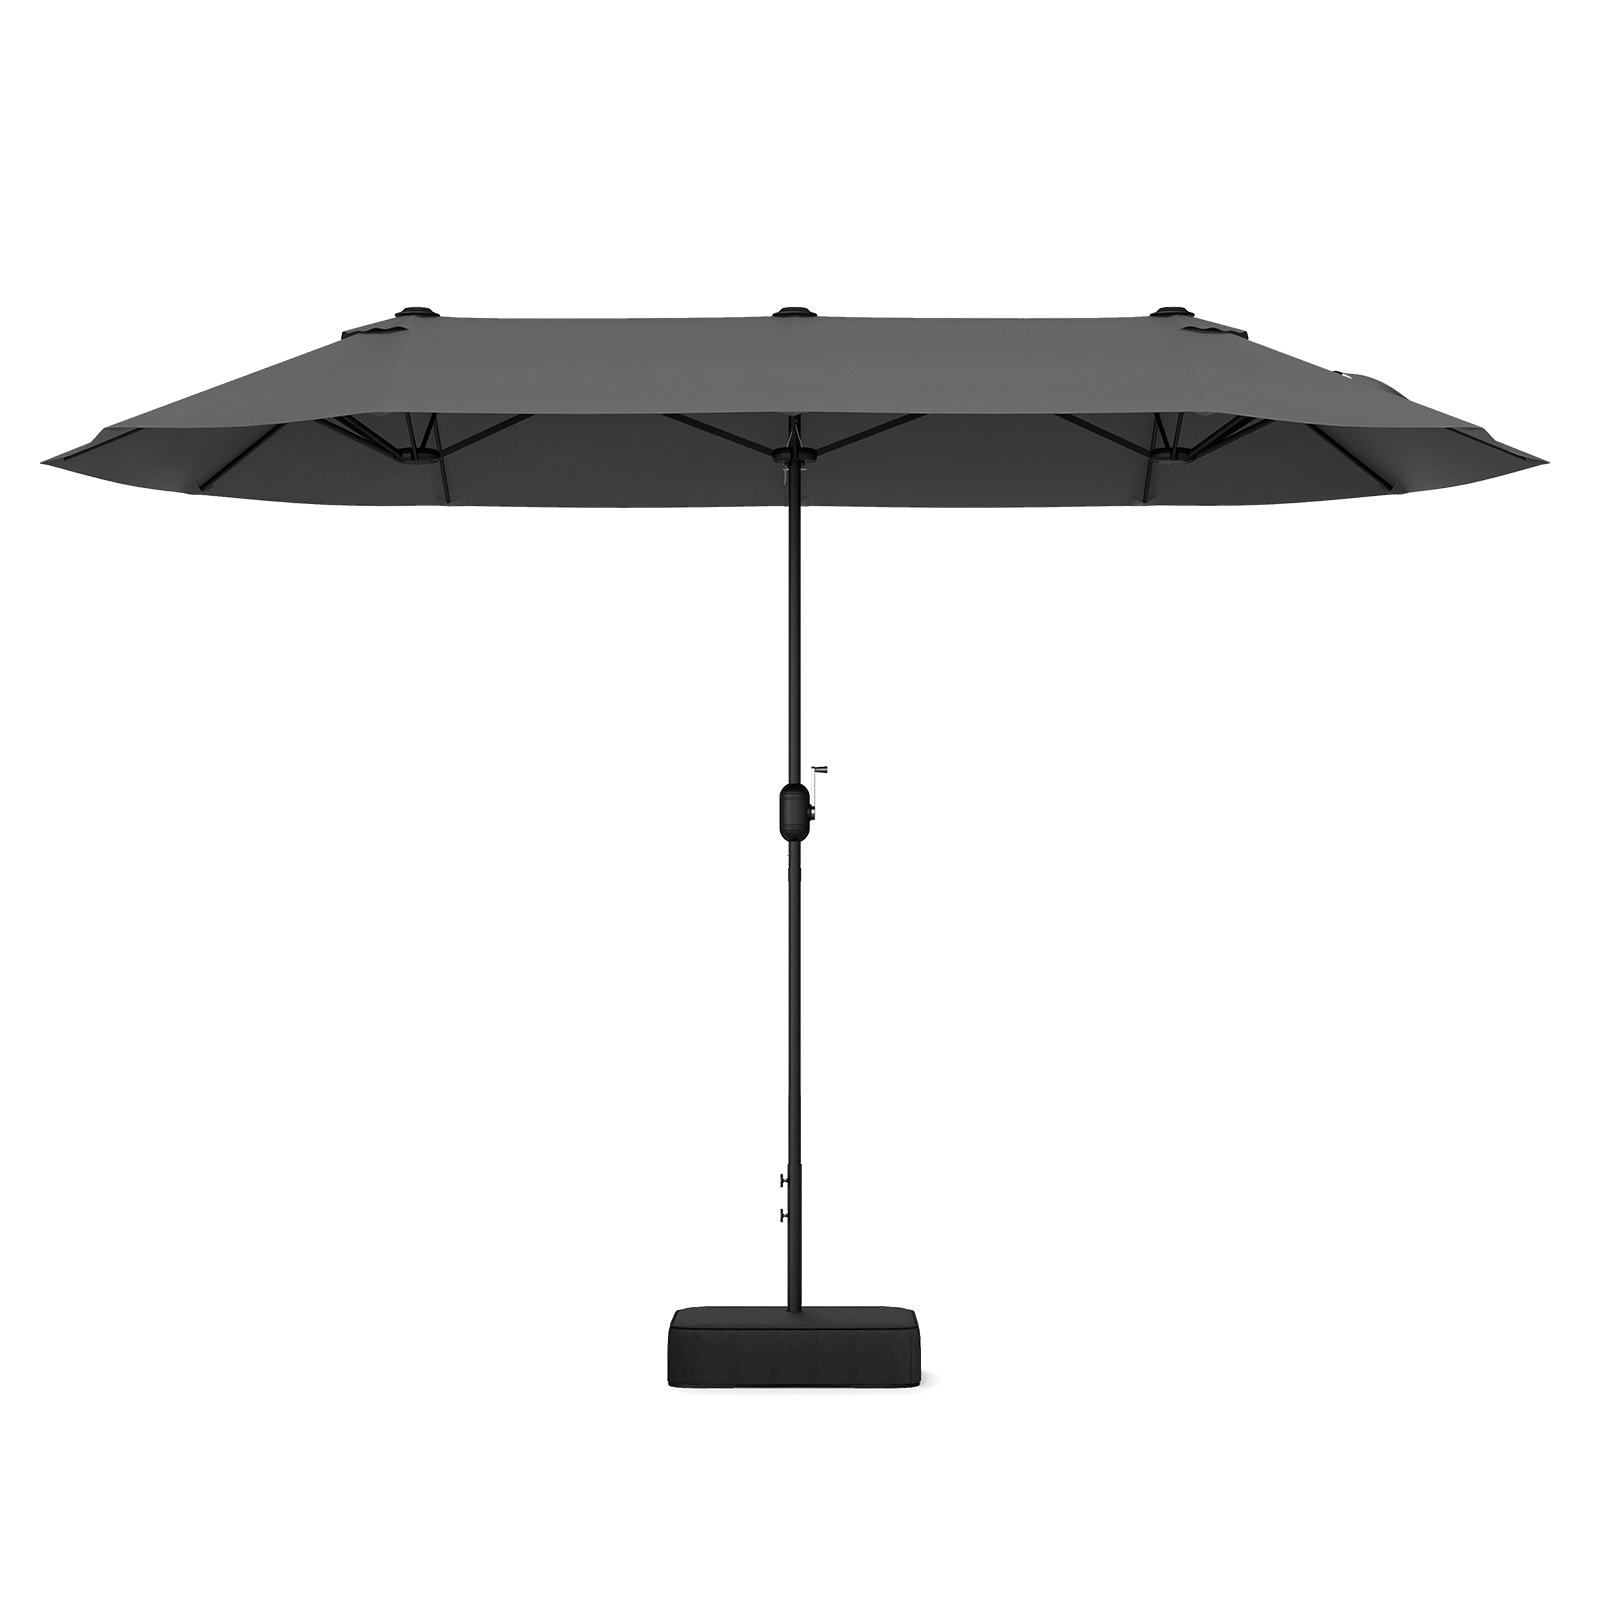 4m_Doublesided_Patio_Umbrella_with_Crank_Handle_hs-3.jpg